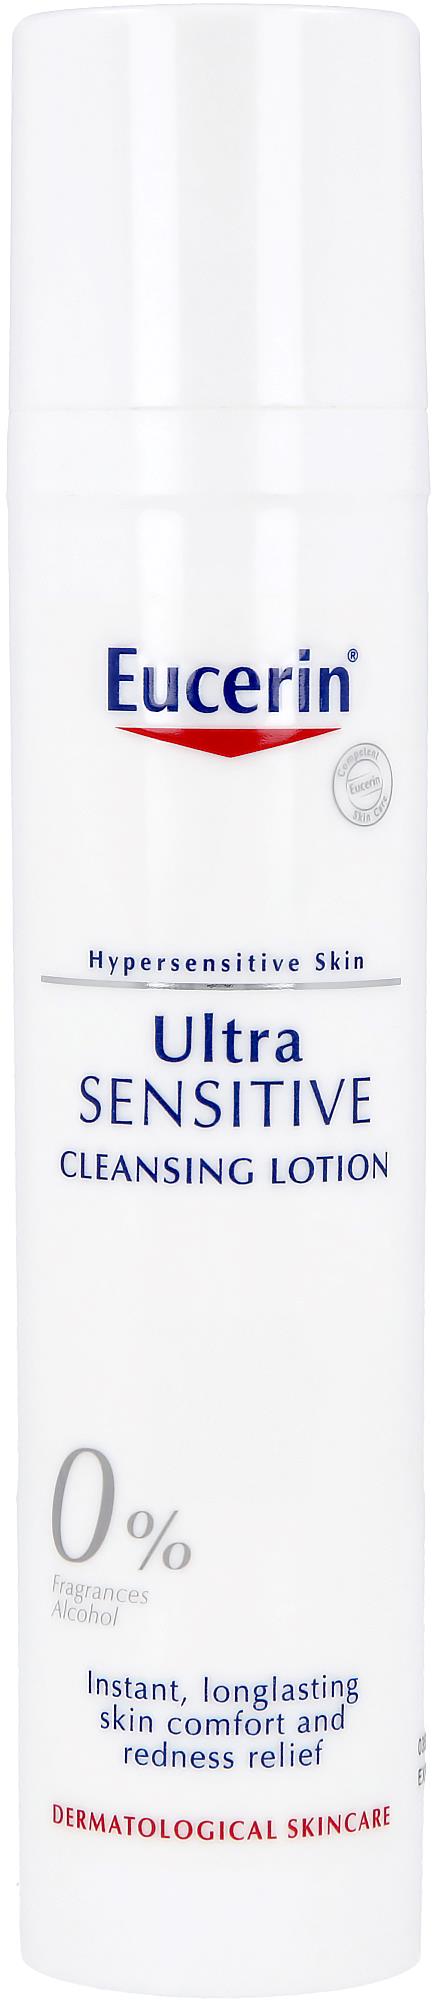 Eucerin UltraSENSITIVE Cleansing 100 ml lyko.com